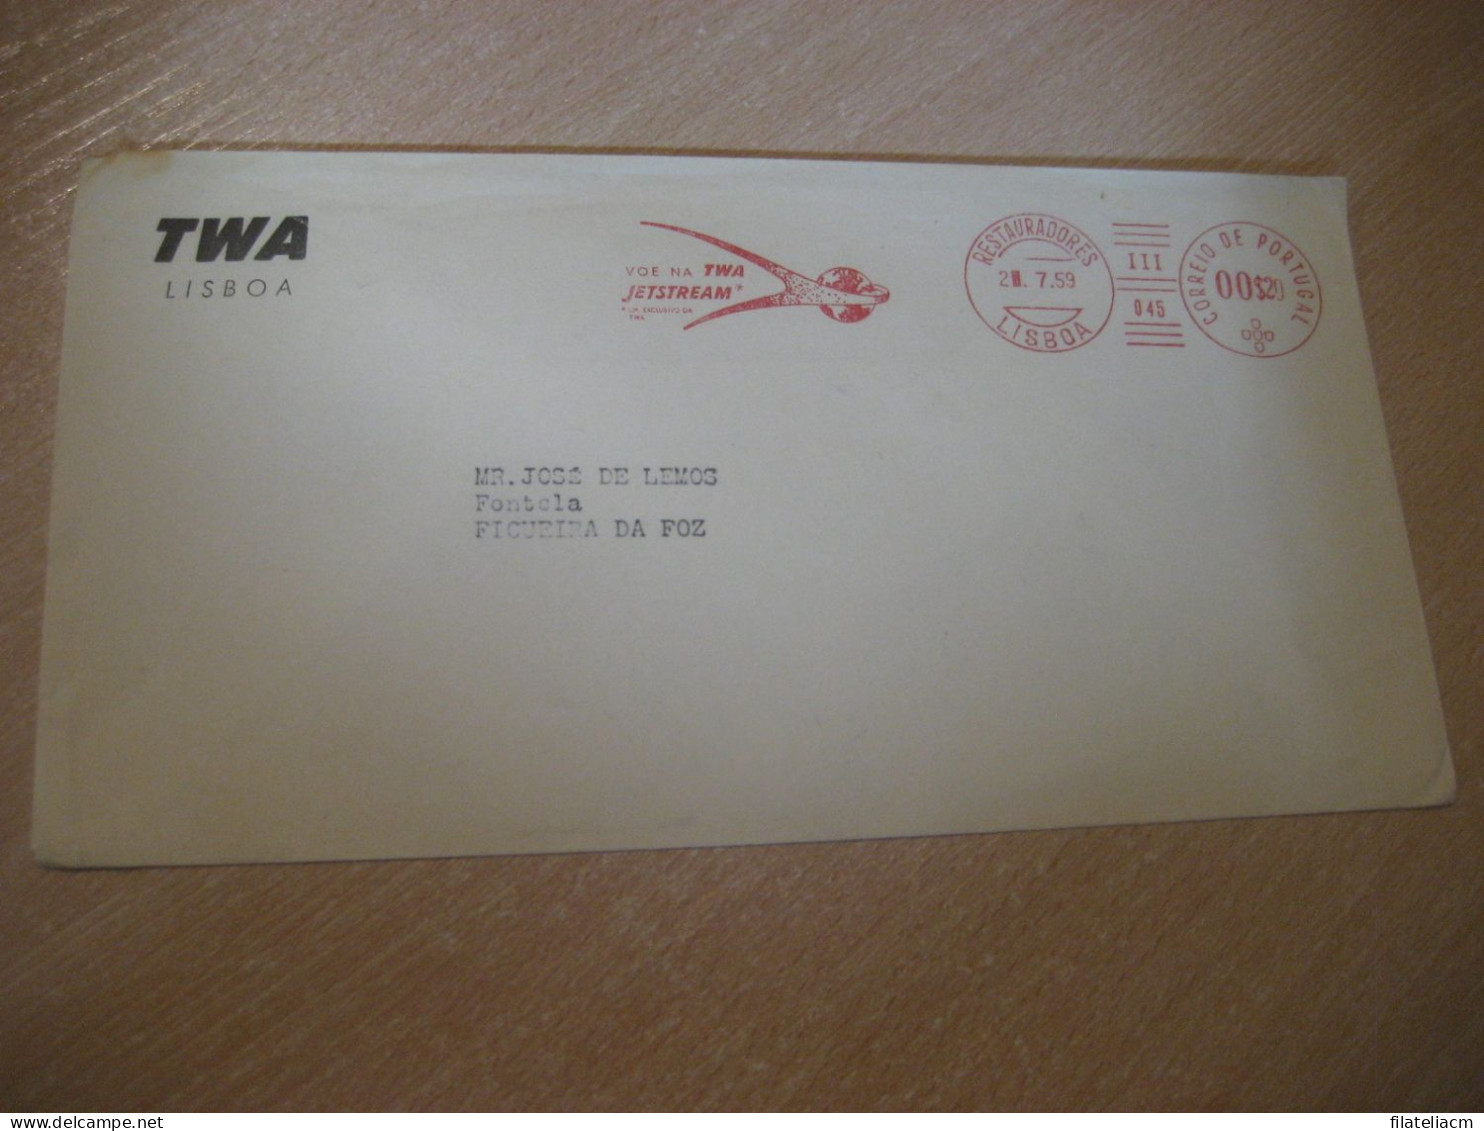 LISBOA 1959 To Figueira Da Foz TWA Jetstream Airline Trans World Airlines Flight Meter Mail Cancel Cover PORTUGAL - Briefe U. Dokumente